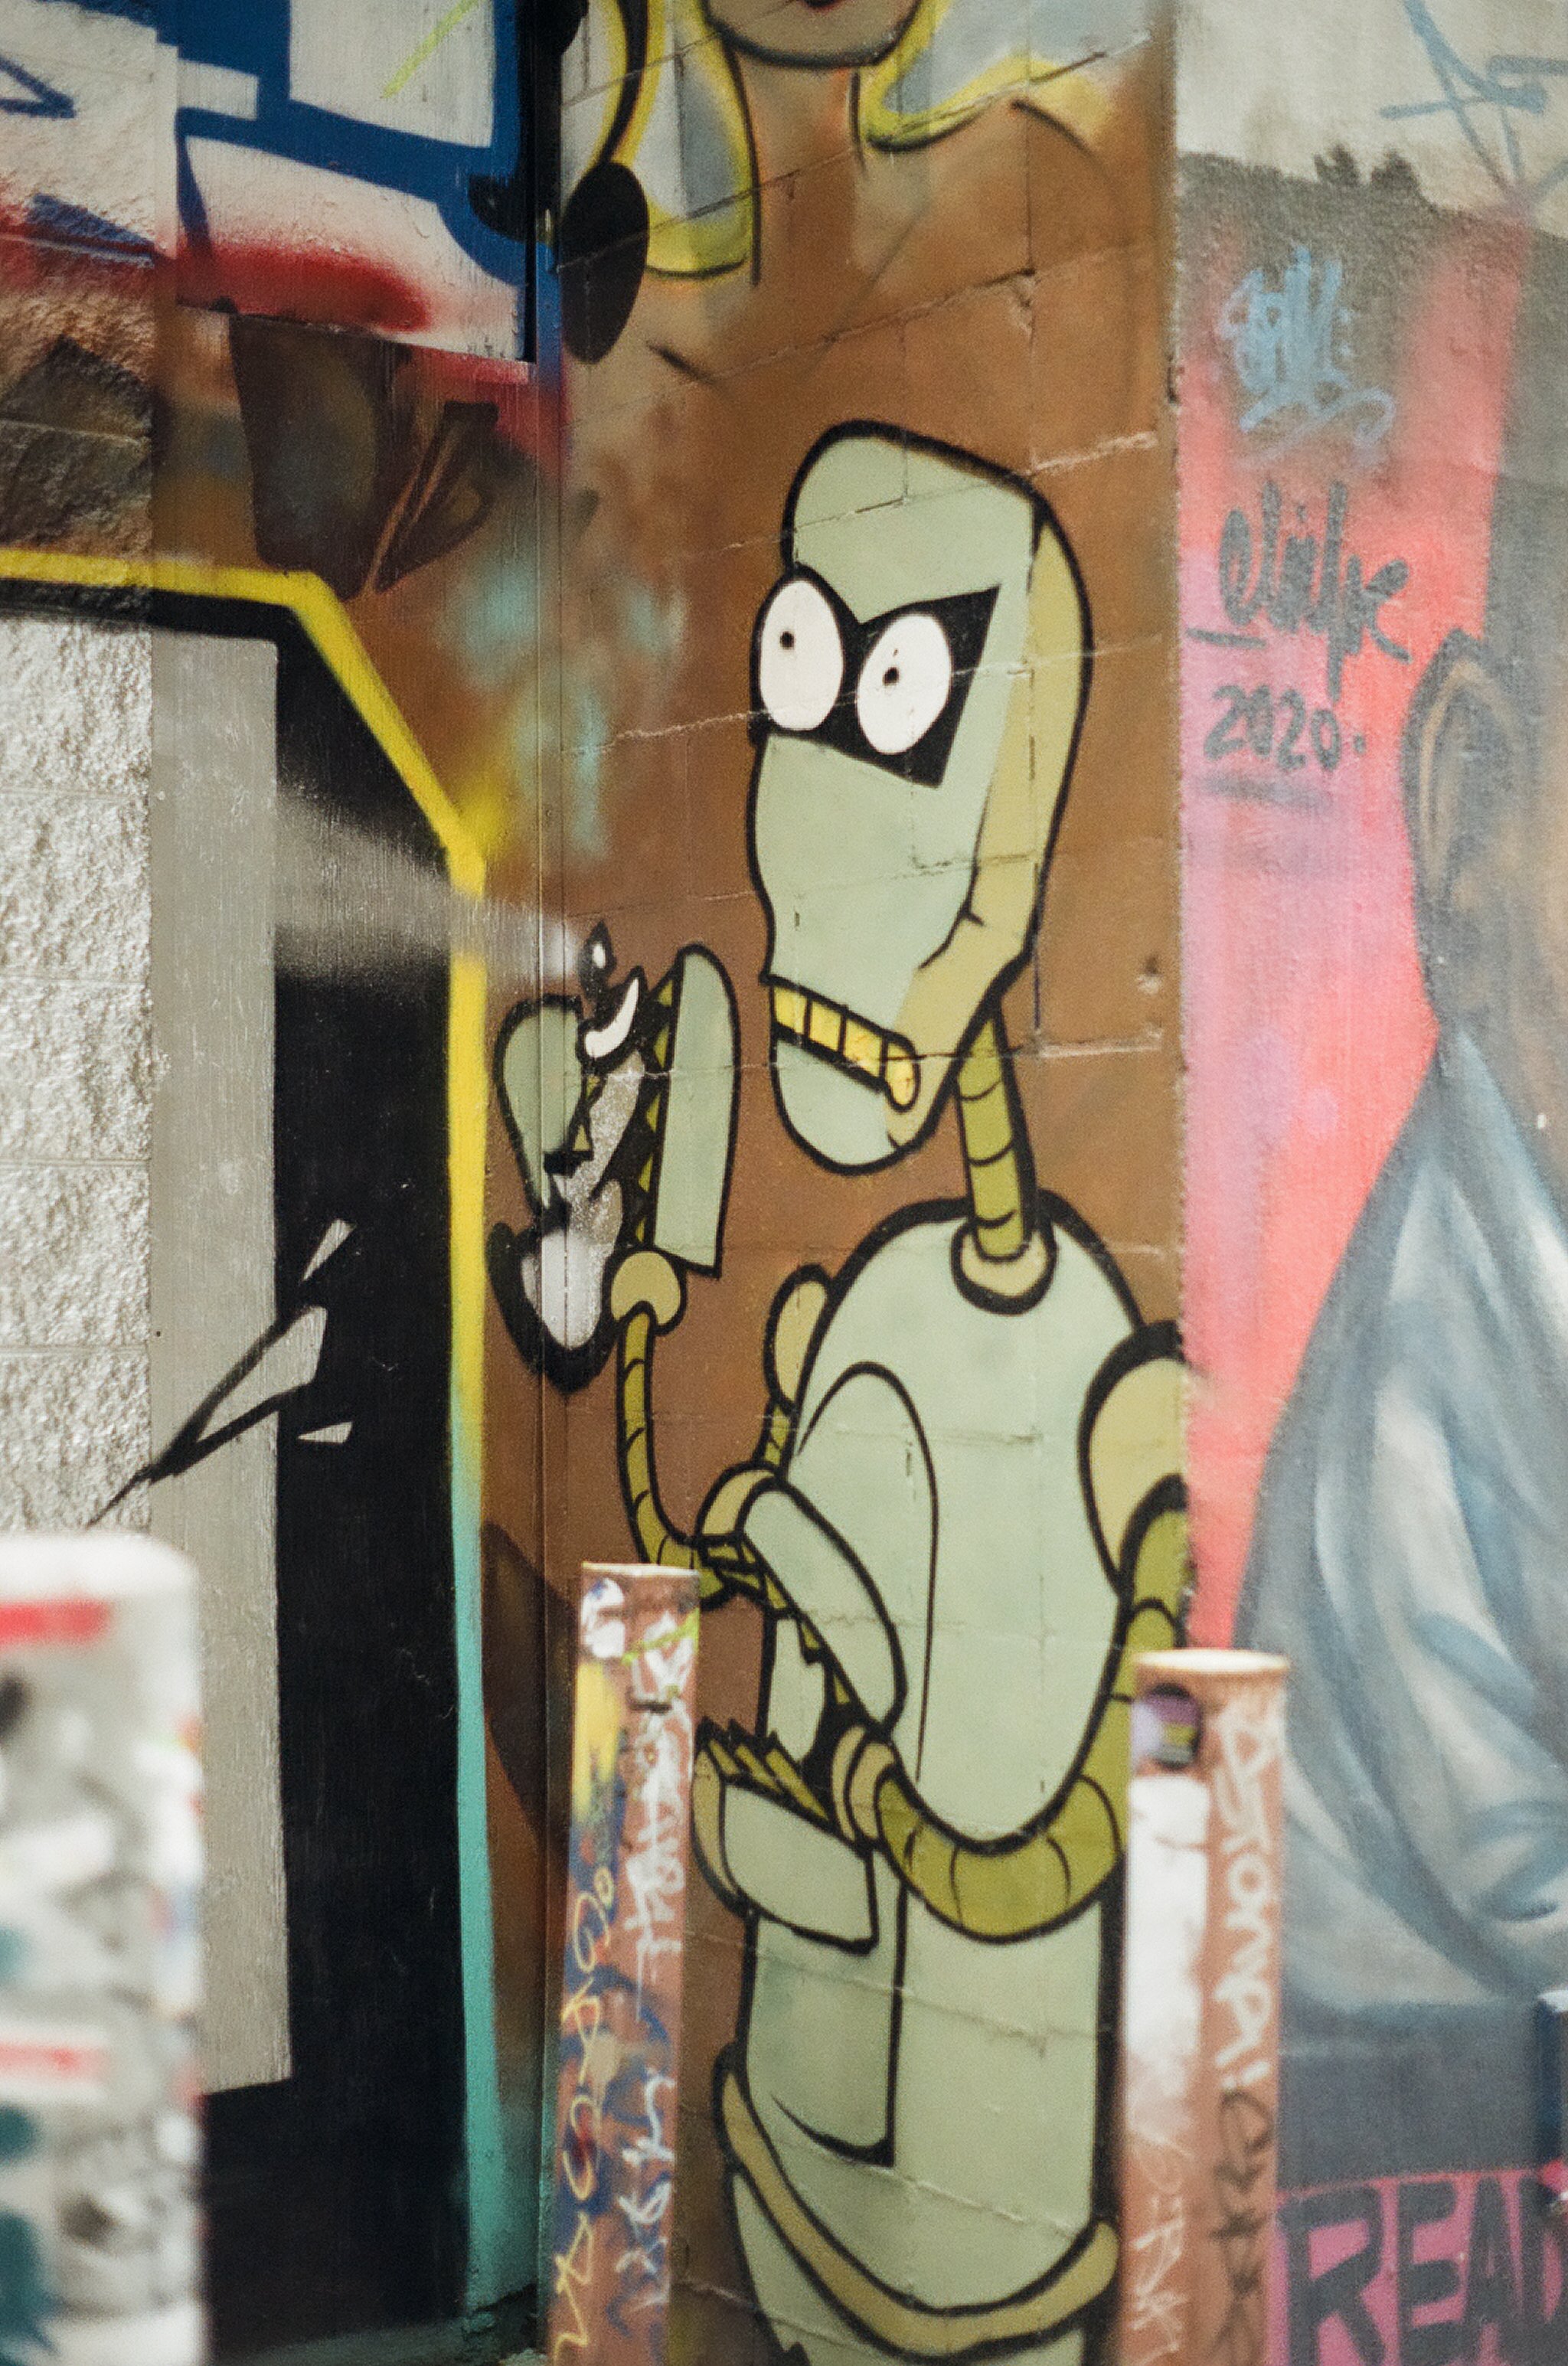  Graffiti Alley in Toronto, Ontario 